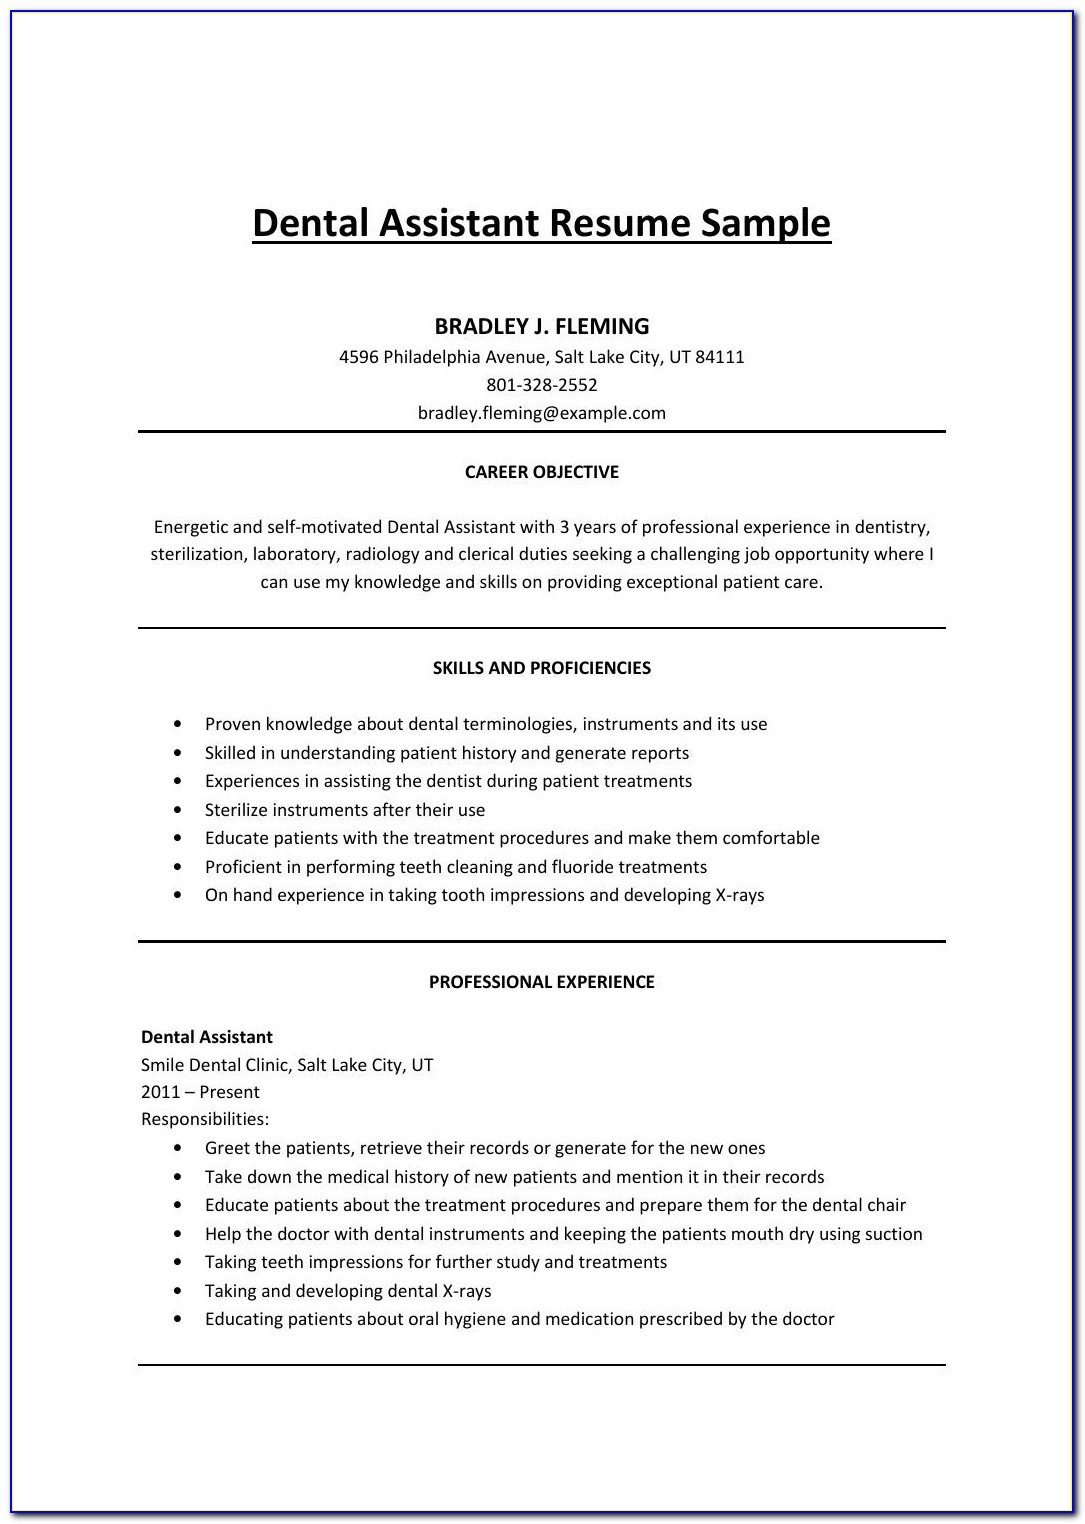 Samples Of Resume In Word Format